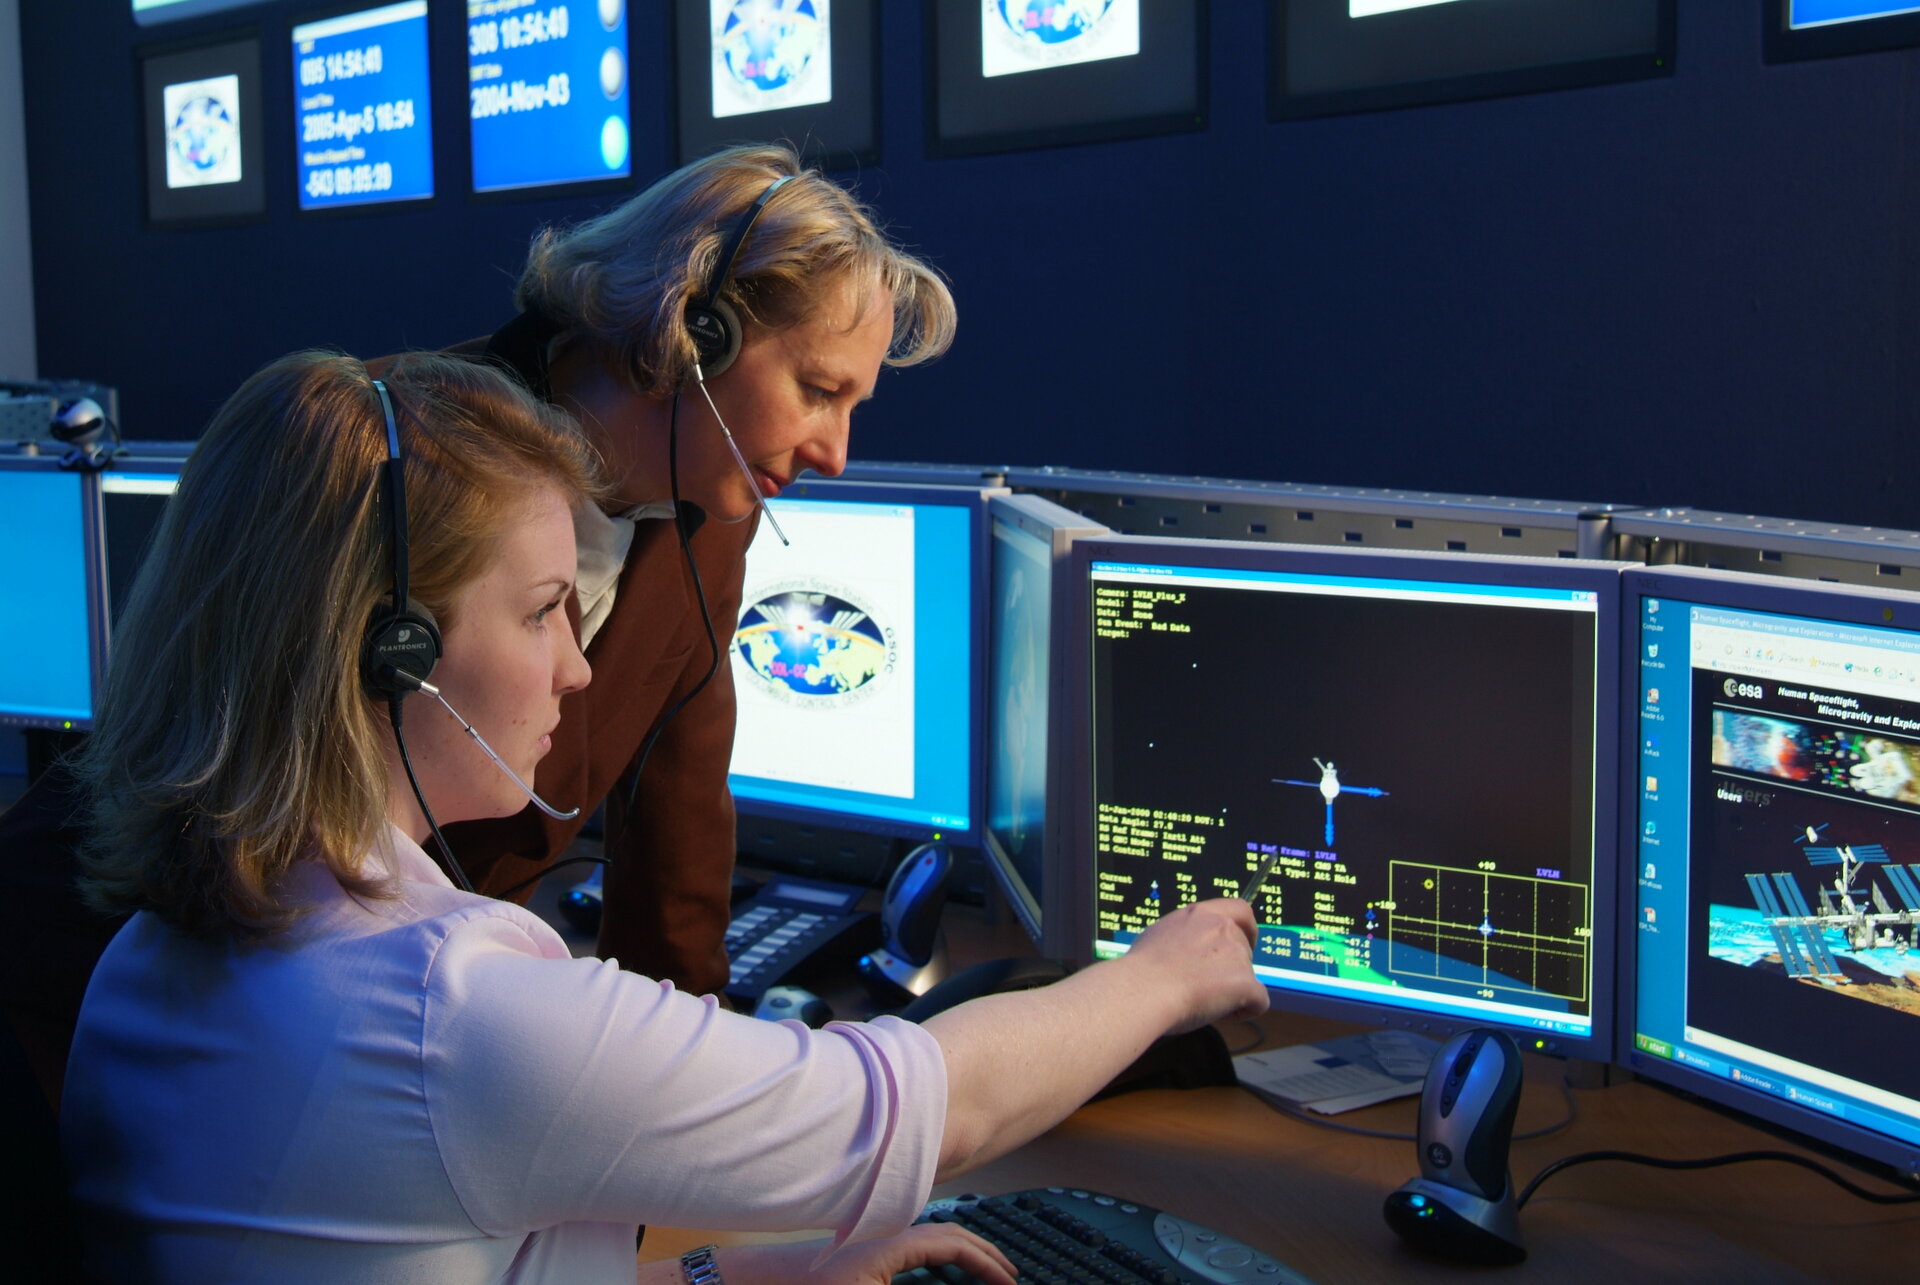 ESA Flight Directors work alongside DLR and industrial team mission controllers